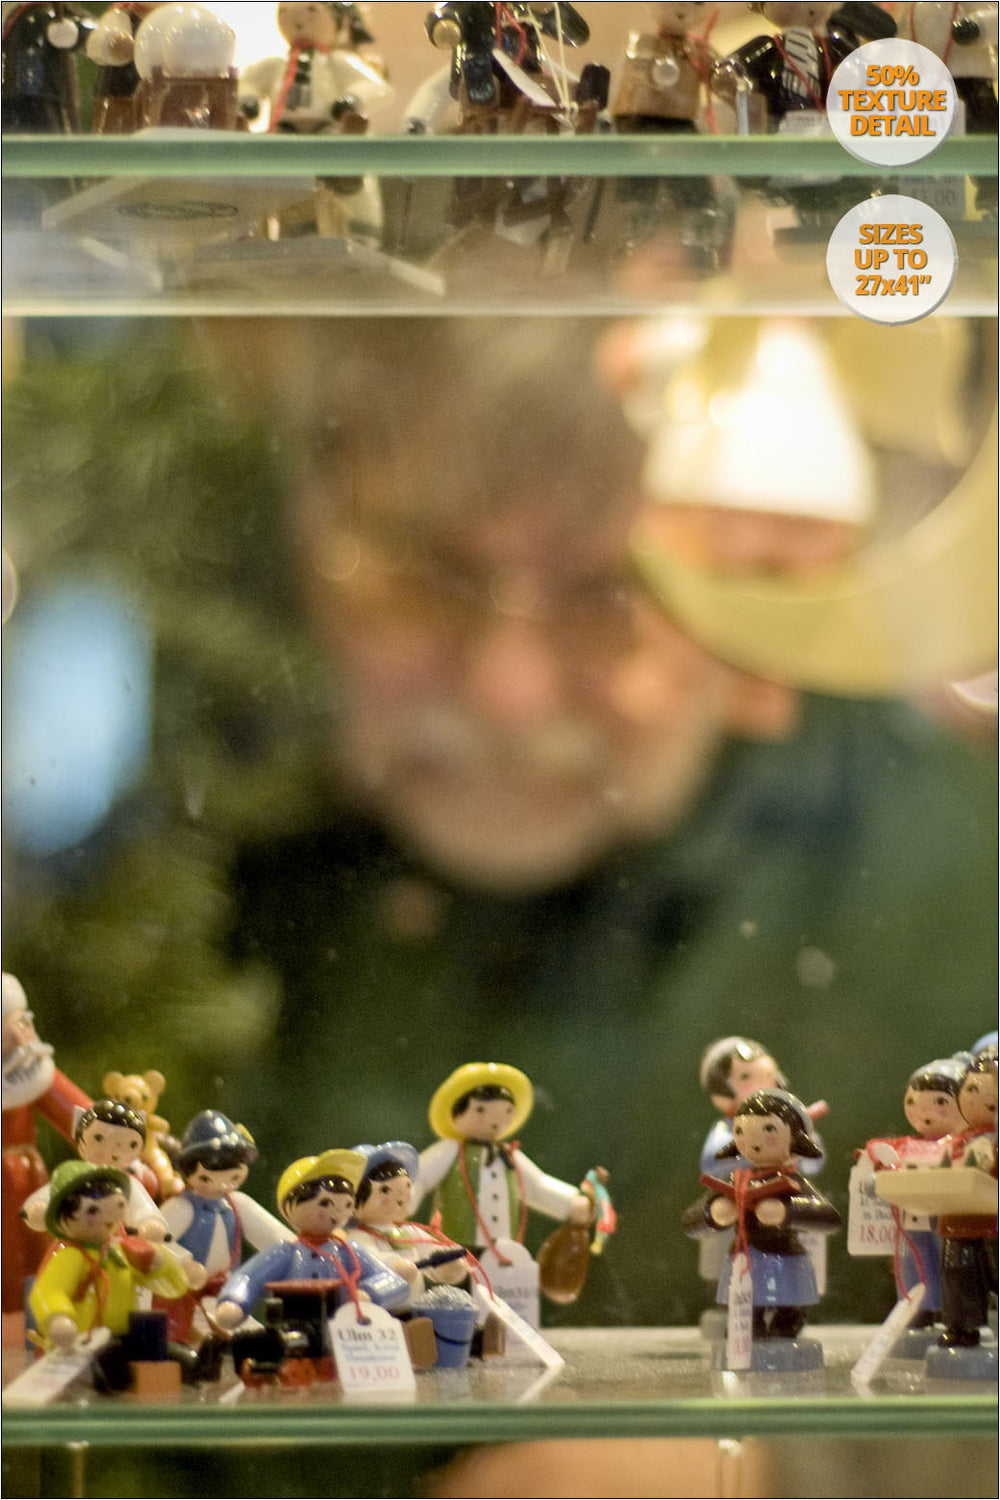 Man selling Christmas toys, Hamburg, Germany. | 50% Detail.